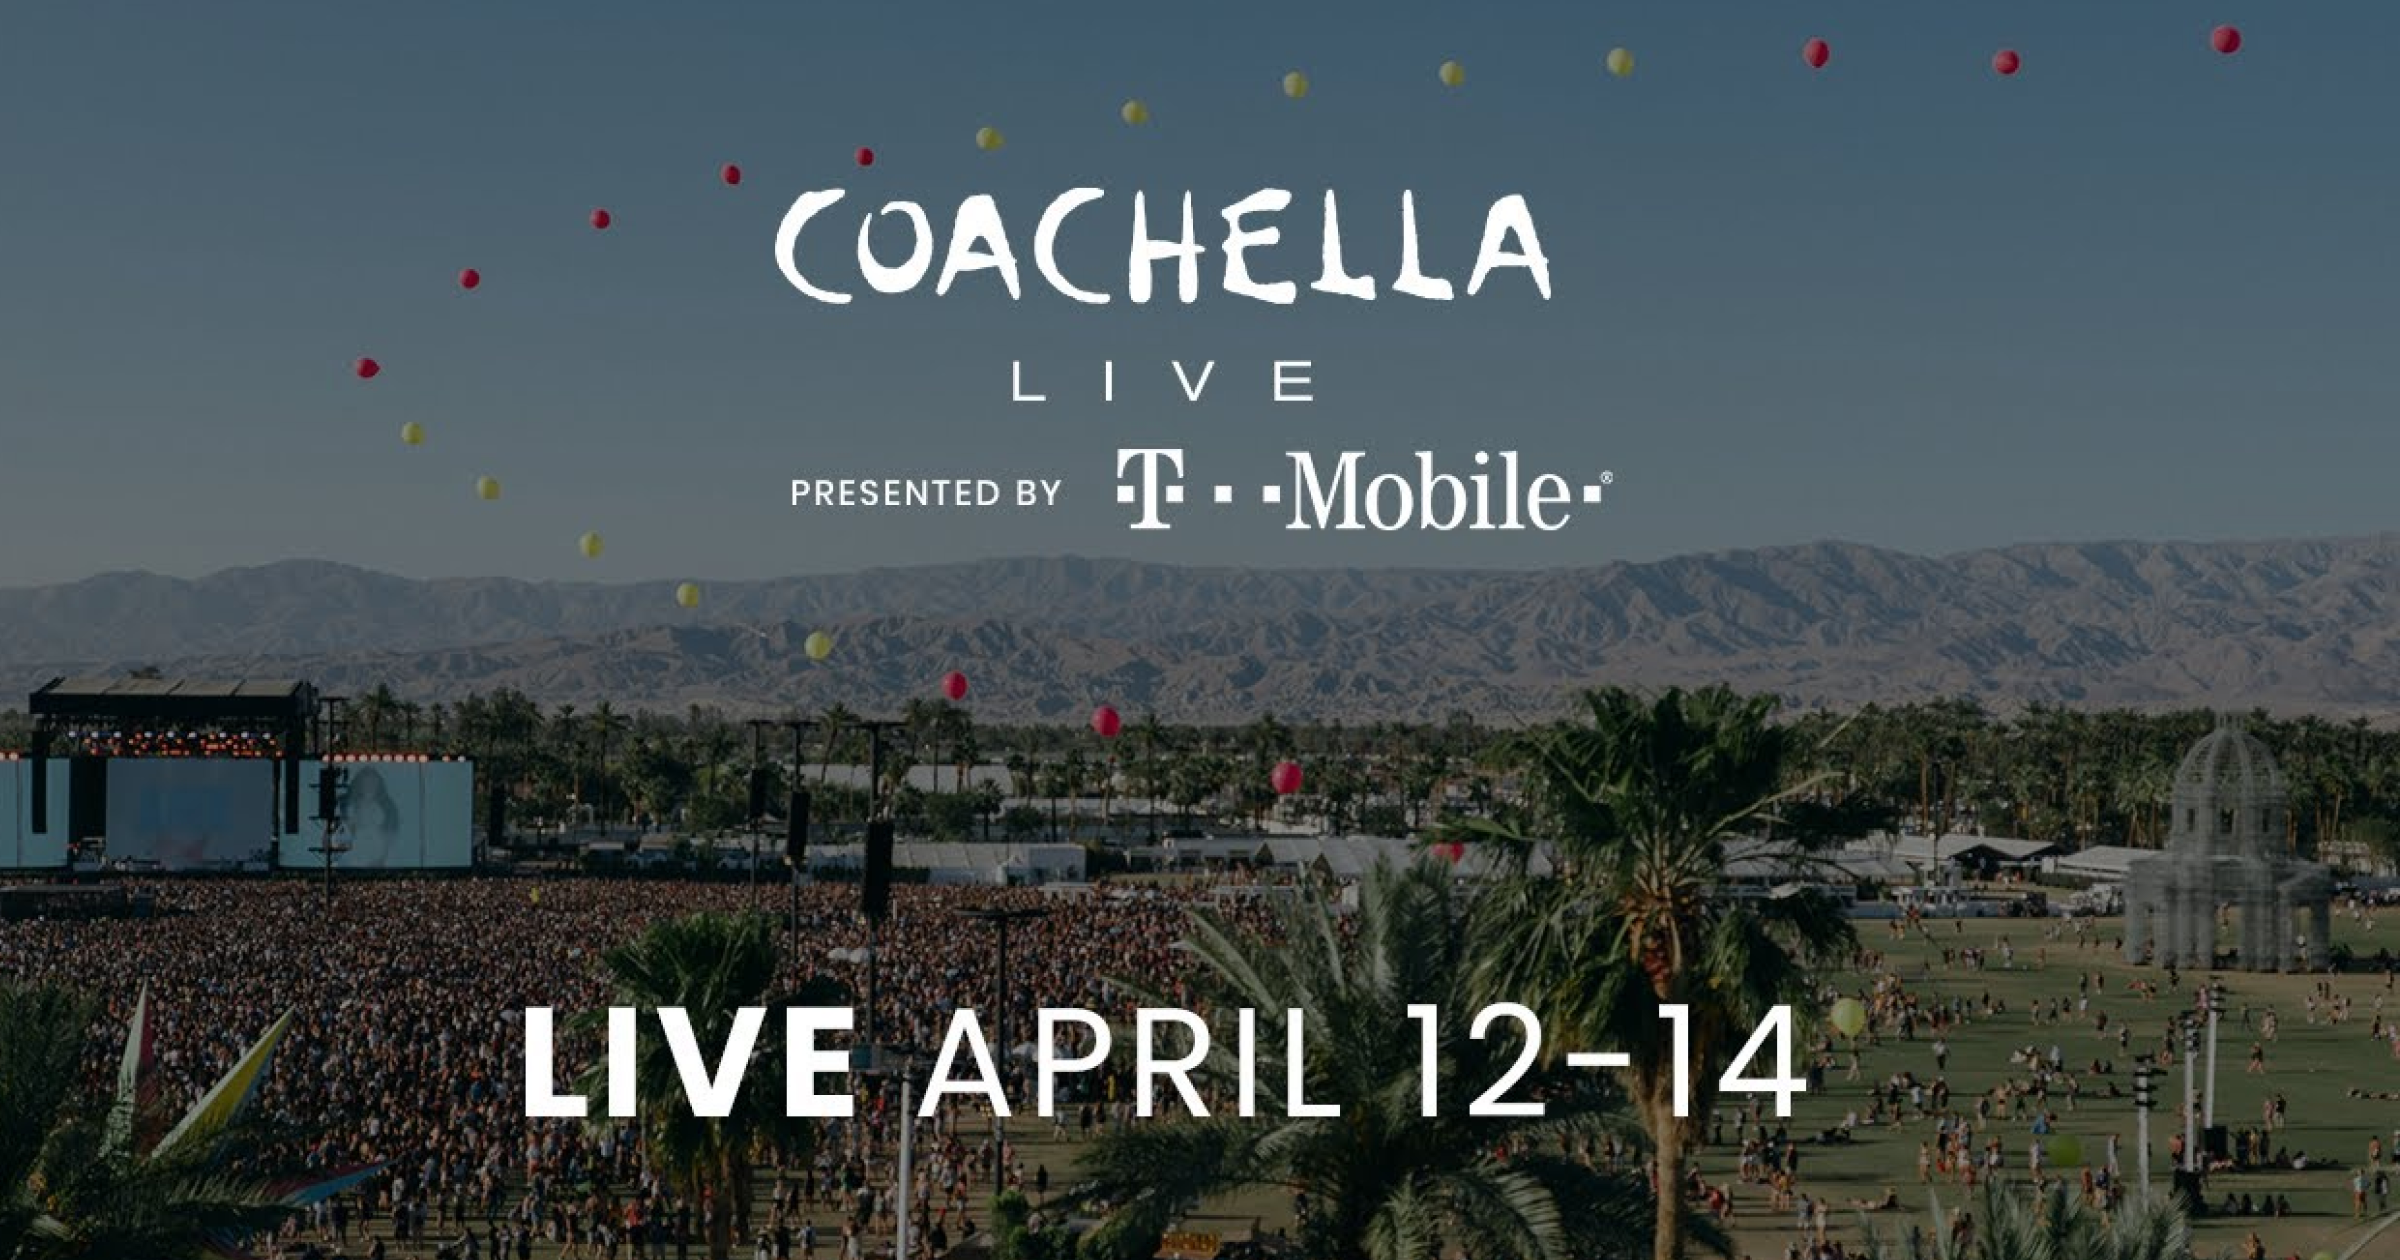 Customer engagement | Media and entertainment | Coachella